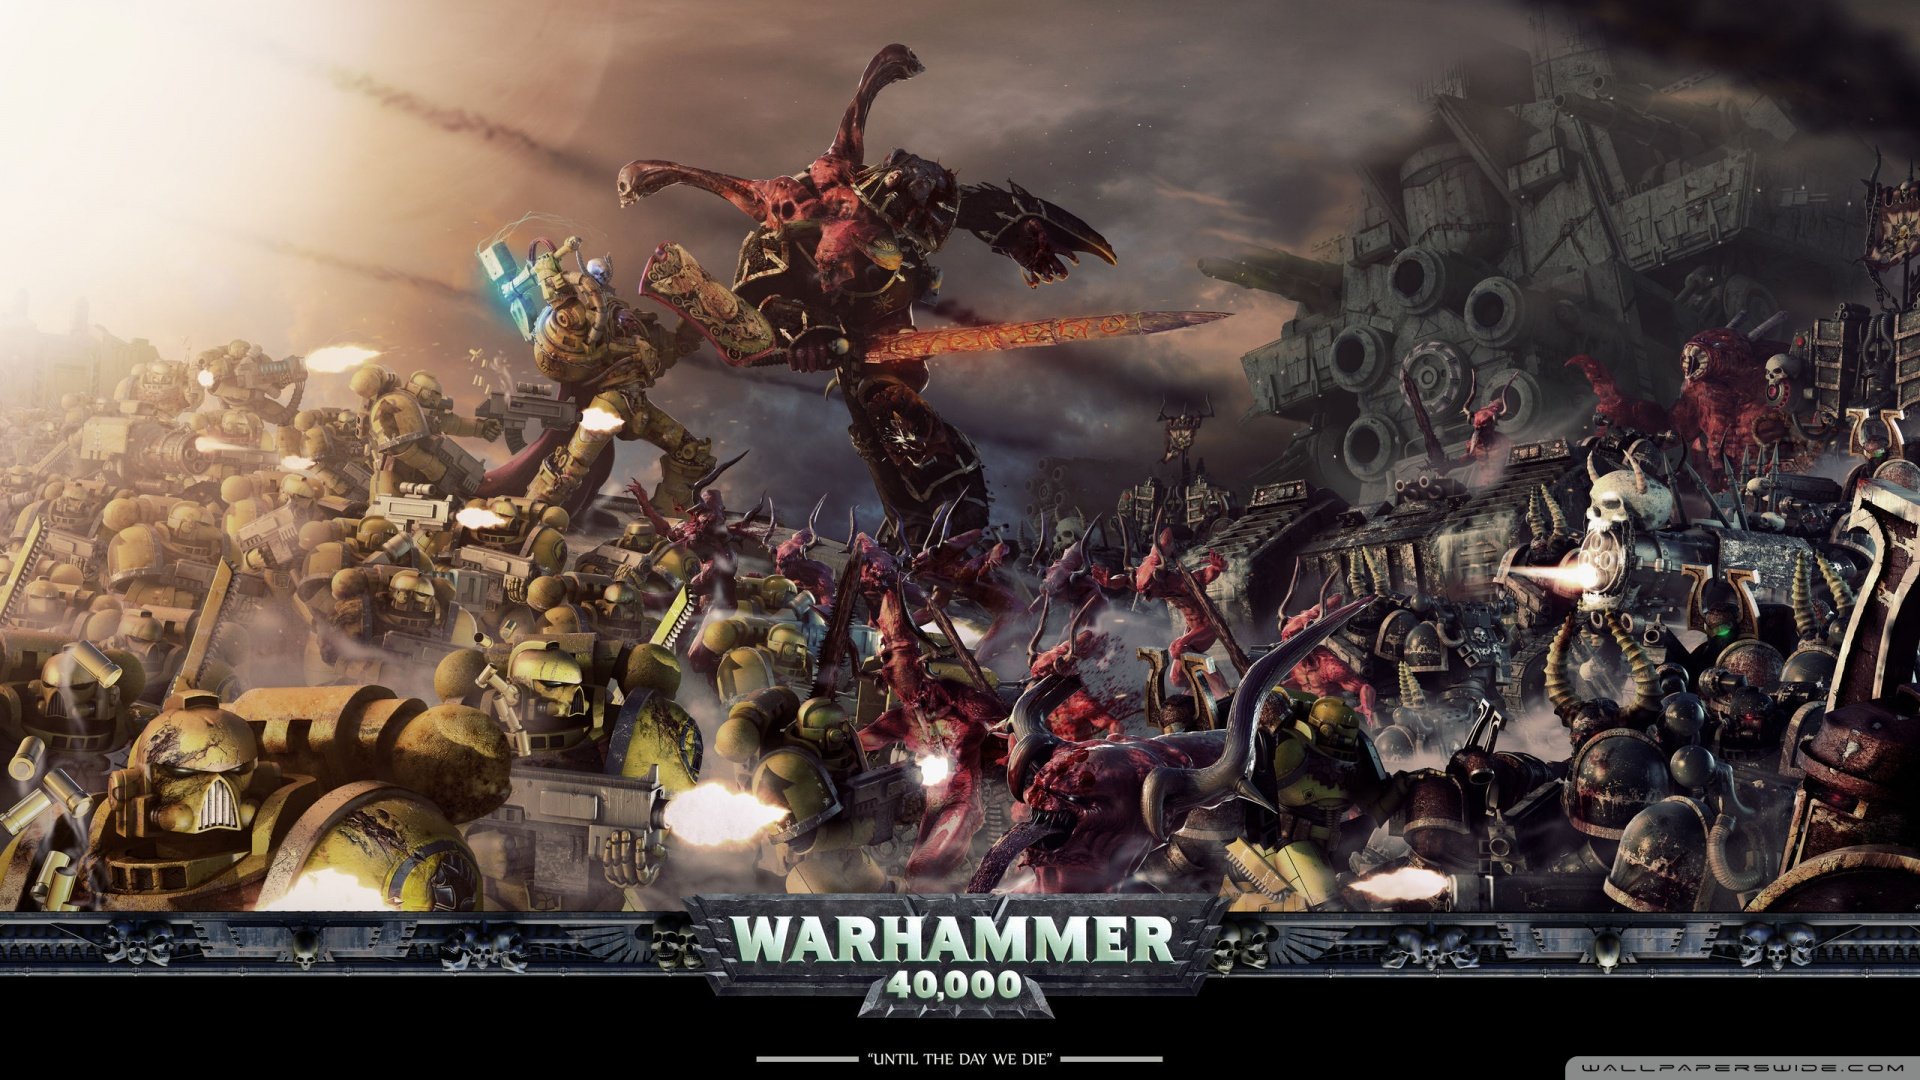 Warhammer 40000 Battle Ultra HD Desktop Background Wallpaper for 4K UHD TV, Tablet